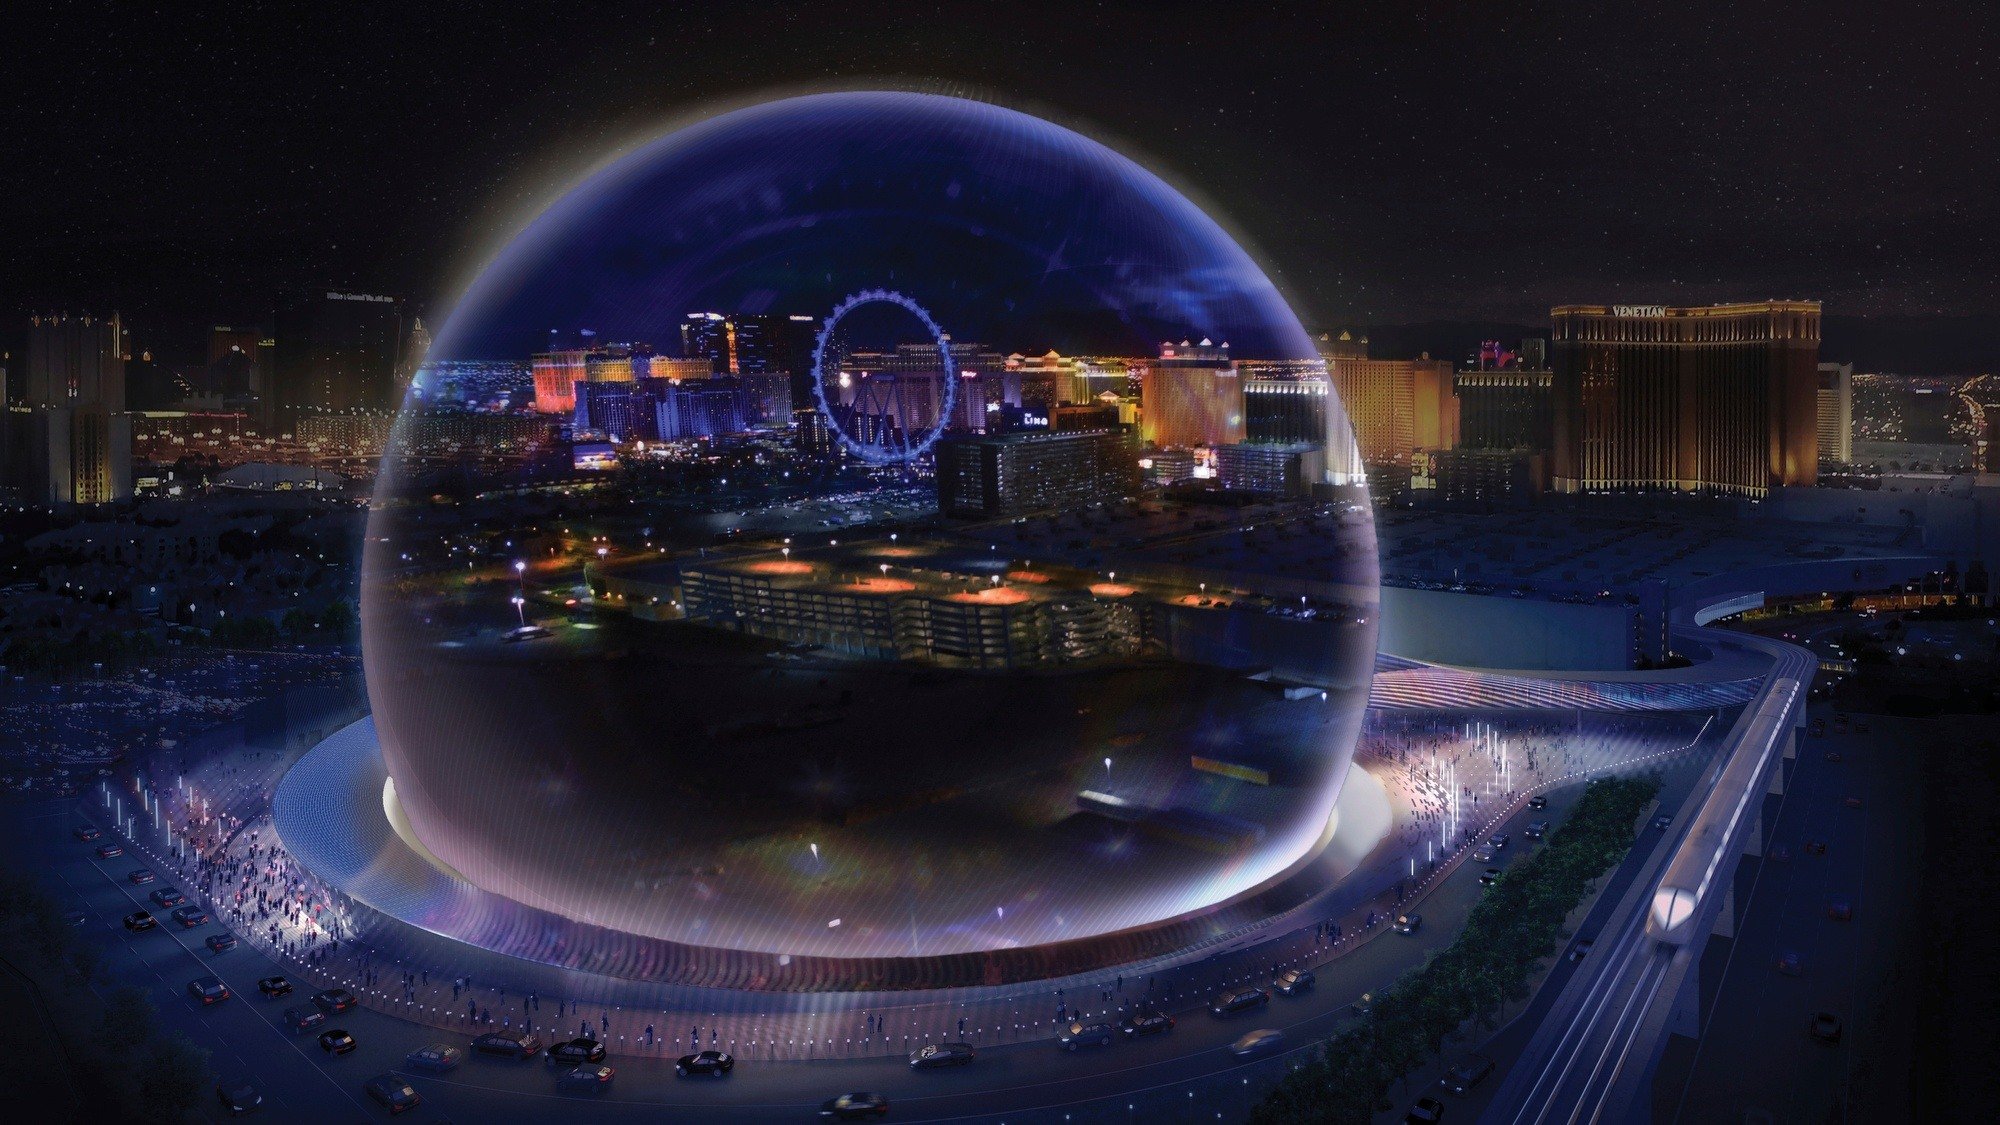 Sphere to Make Las Vegas an Edgier, Governor Sandoval Gets